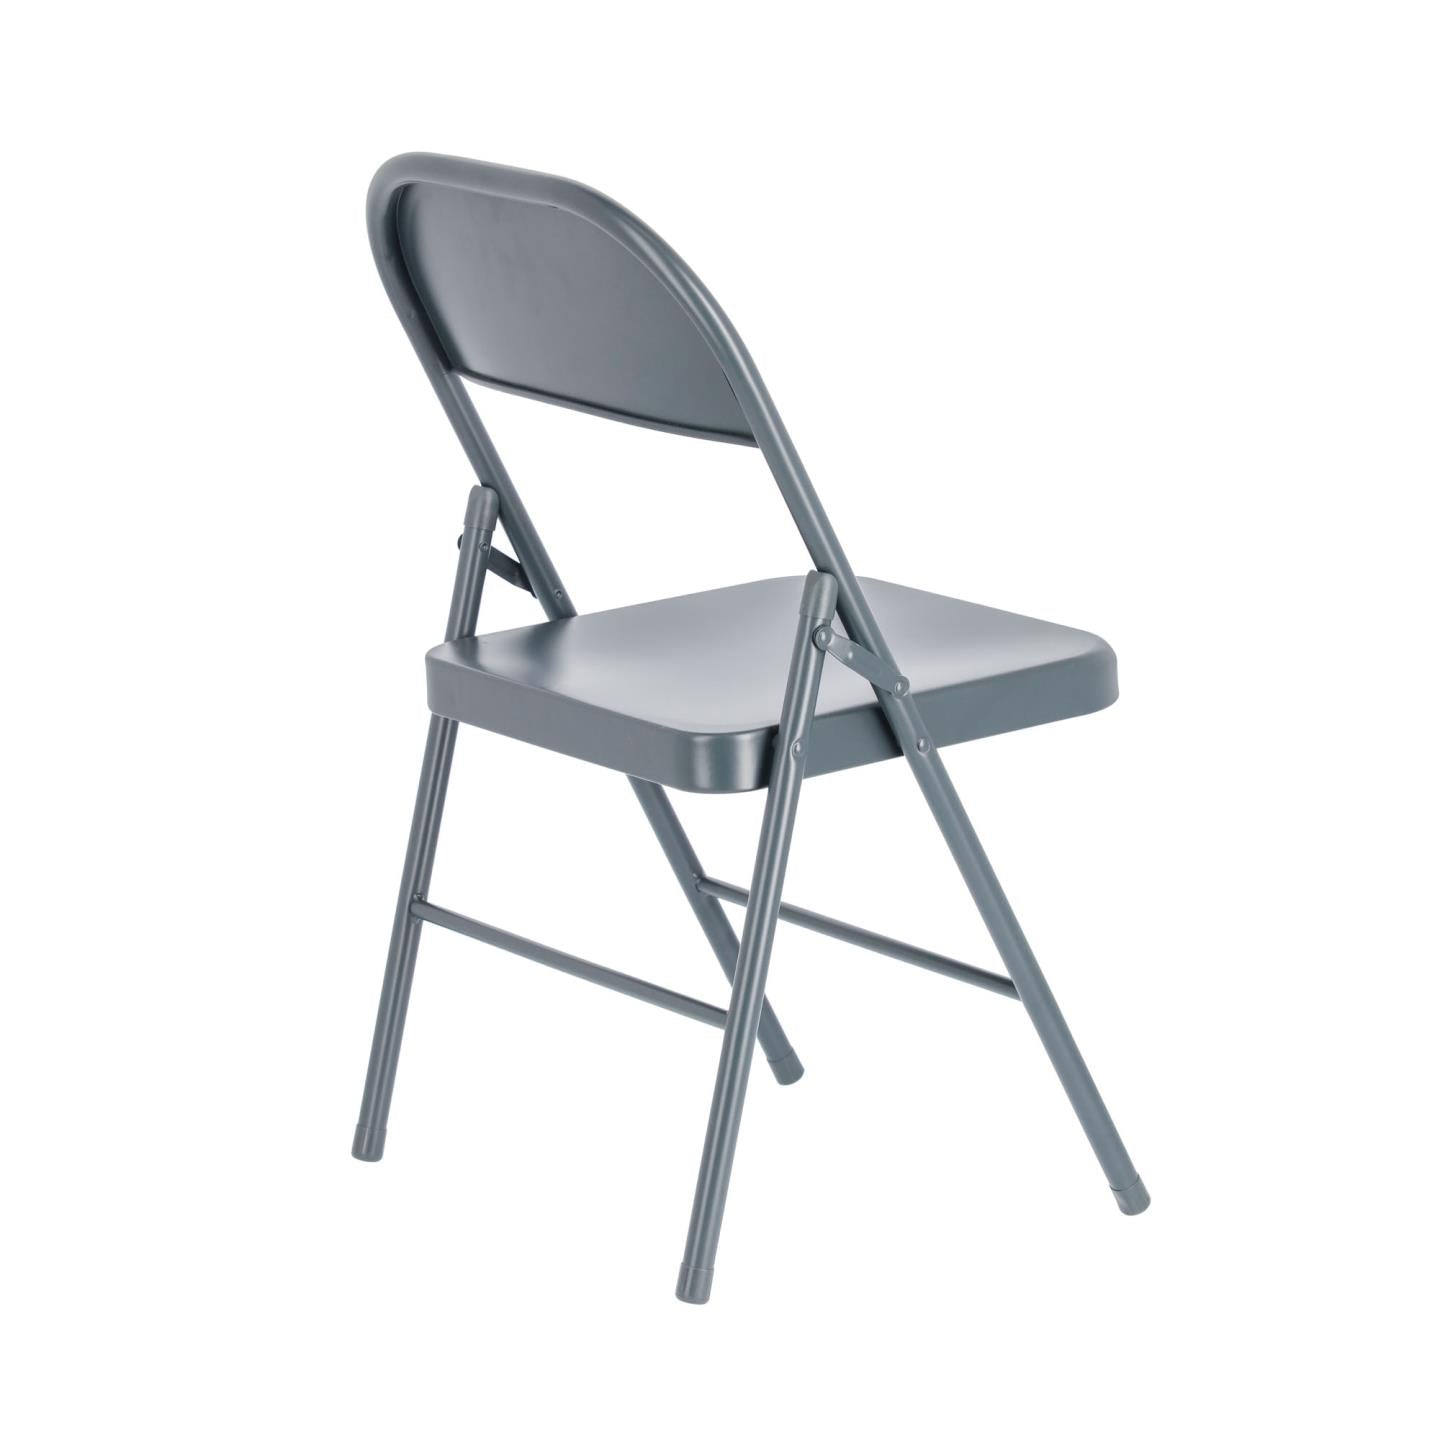 Aidana metal folding chair in dark grey